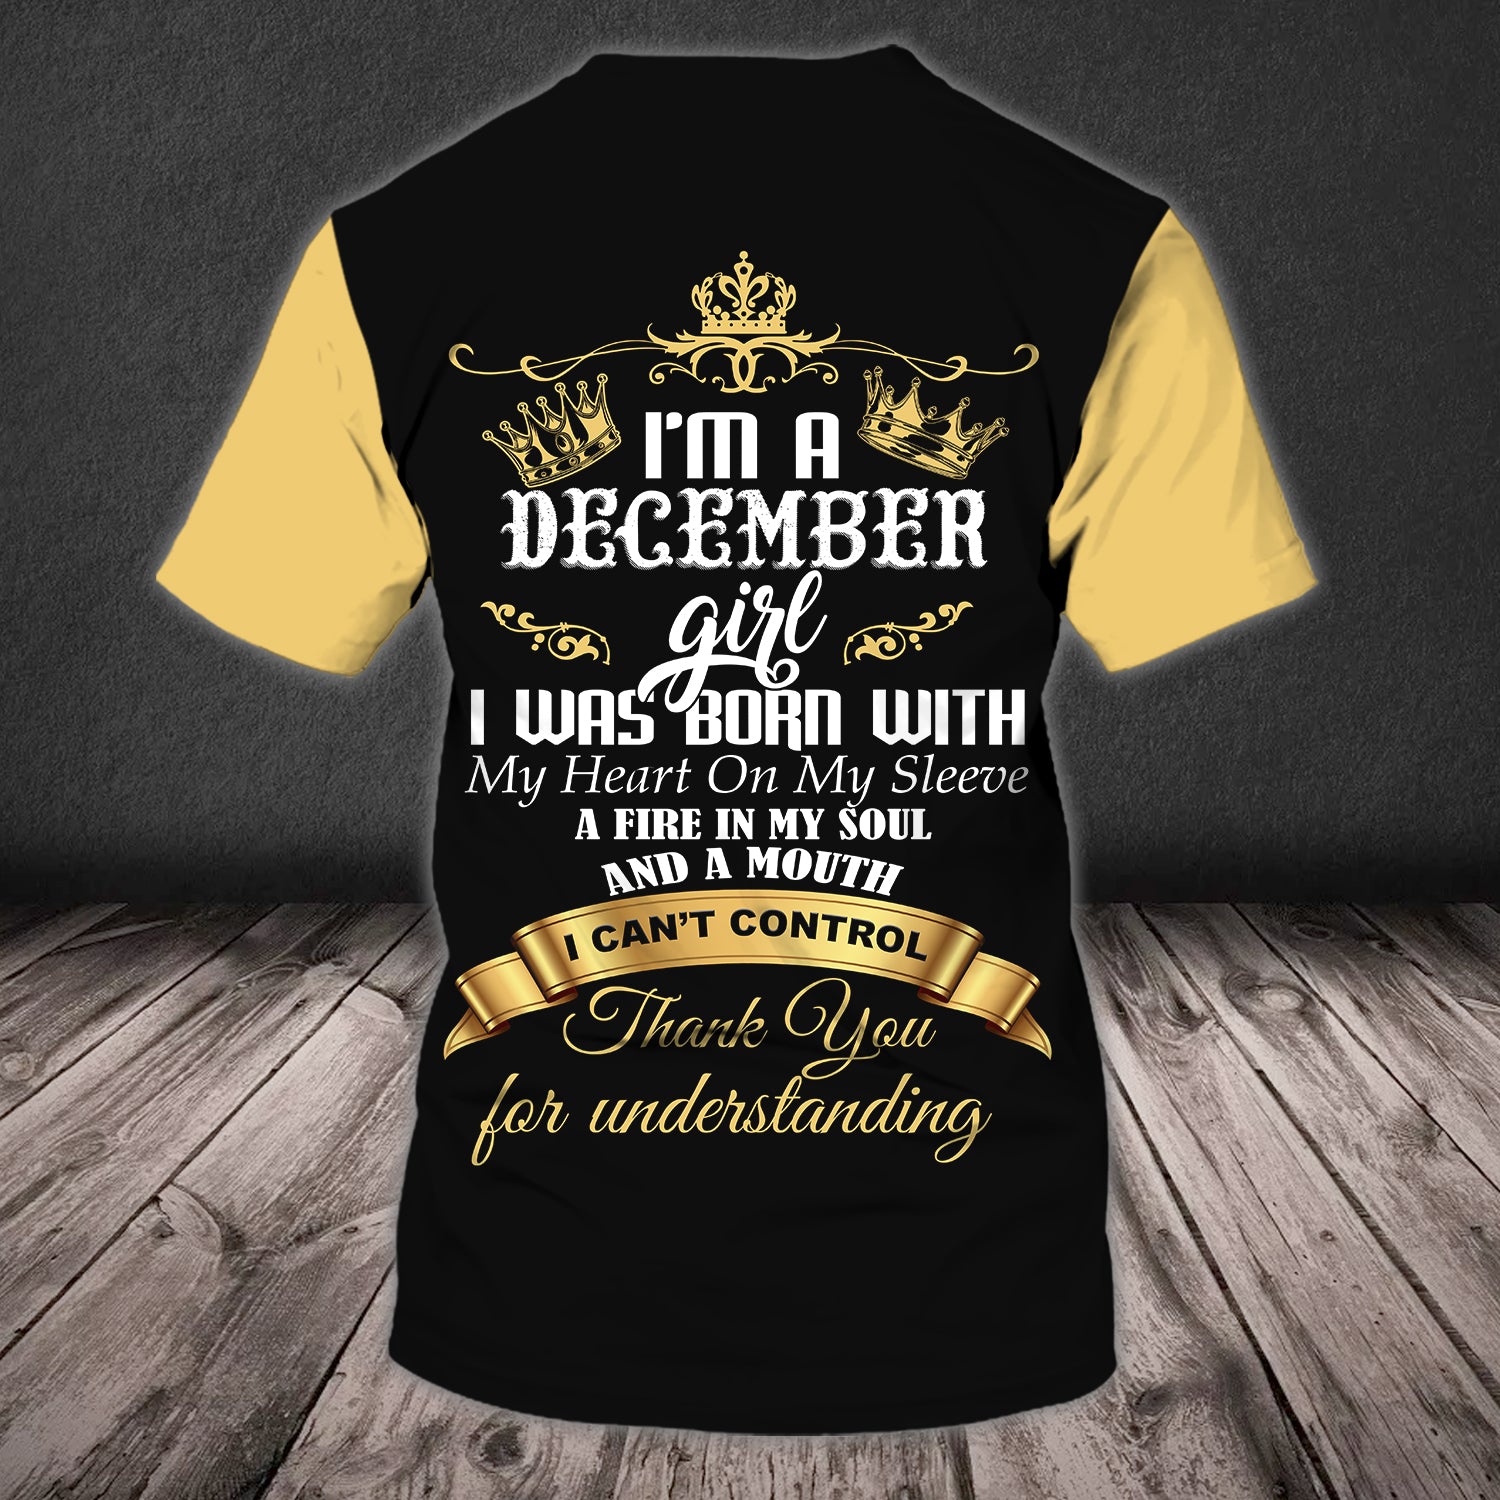 Queen December Girl - Personalized Name 3D Tshirt - Dah